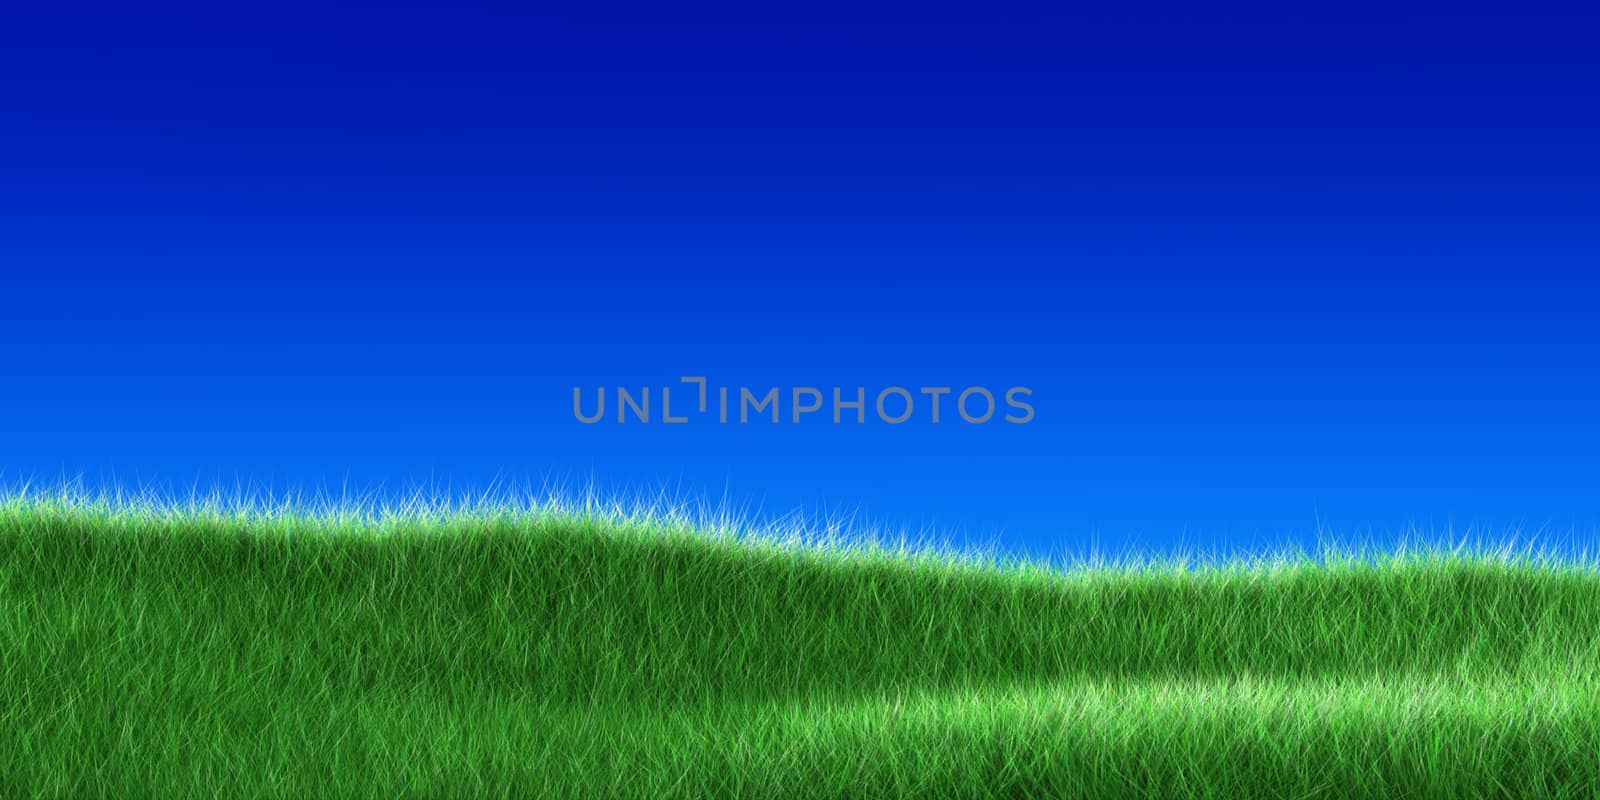 grass on a blue sky by chrisroll